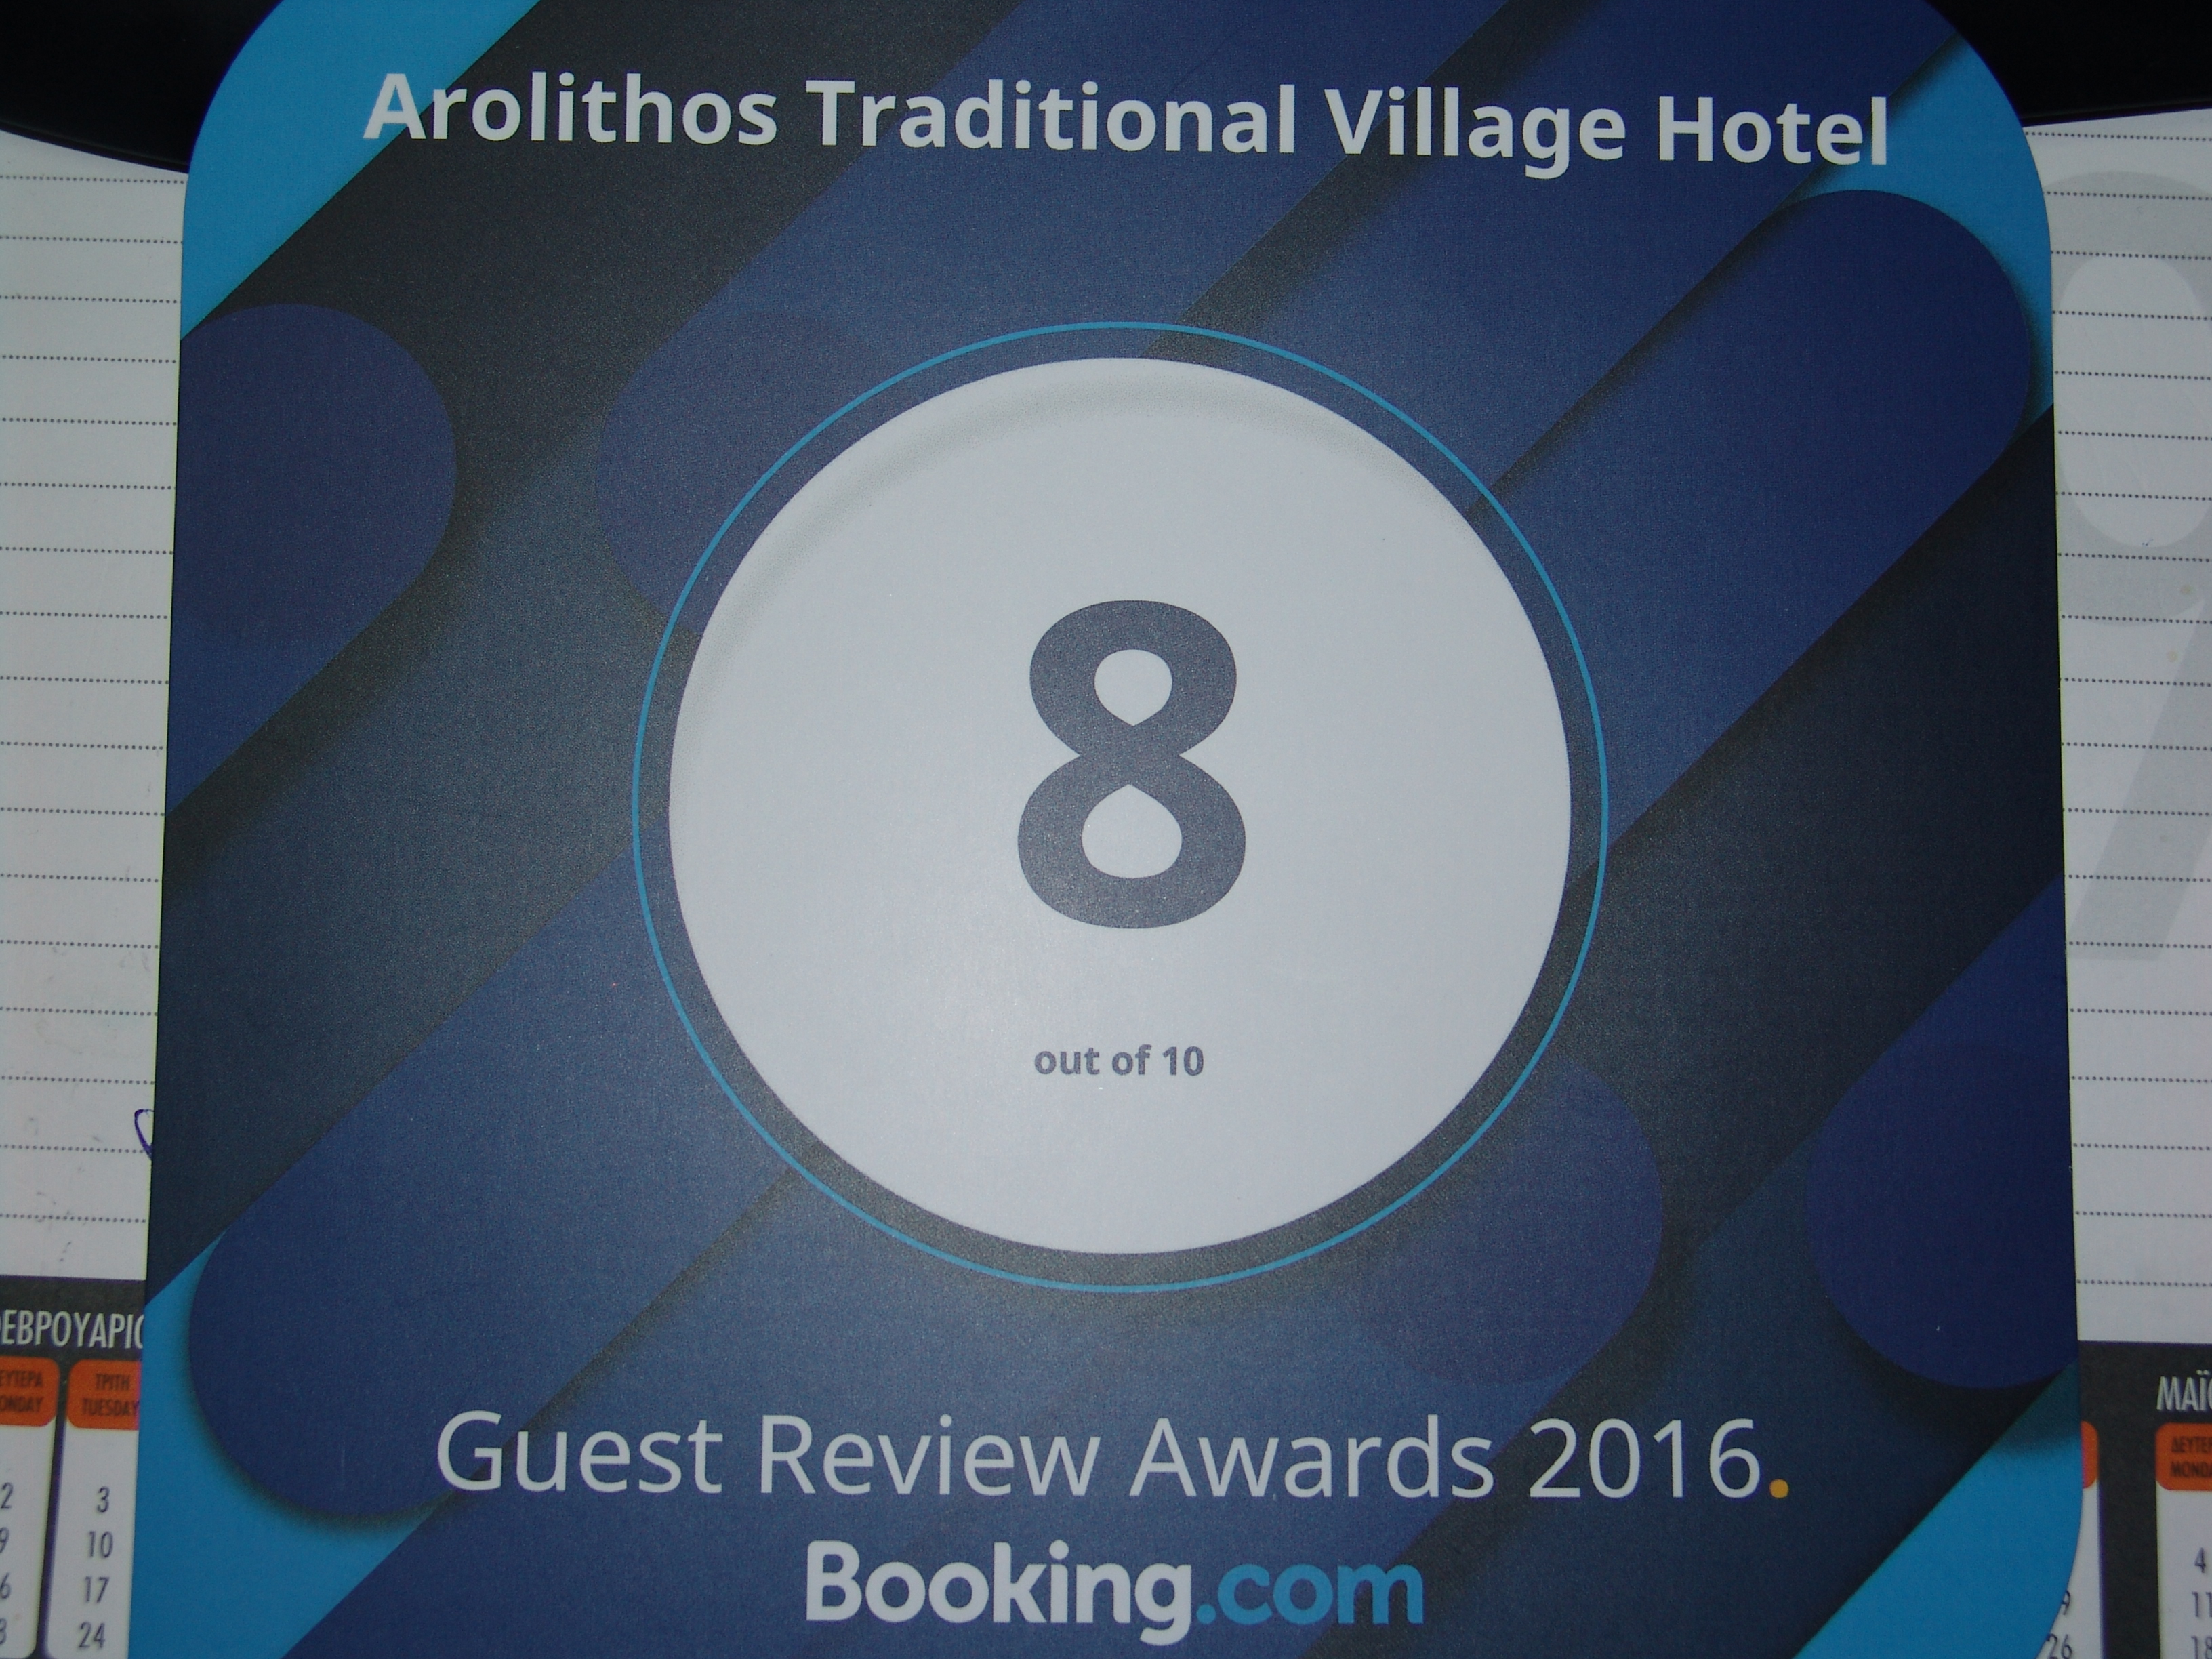 Arolithos Village Hotel Booking com awards (2)